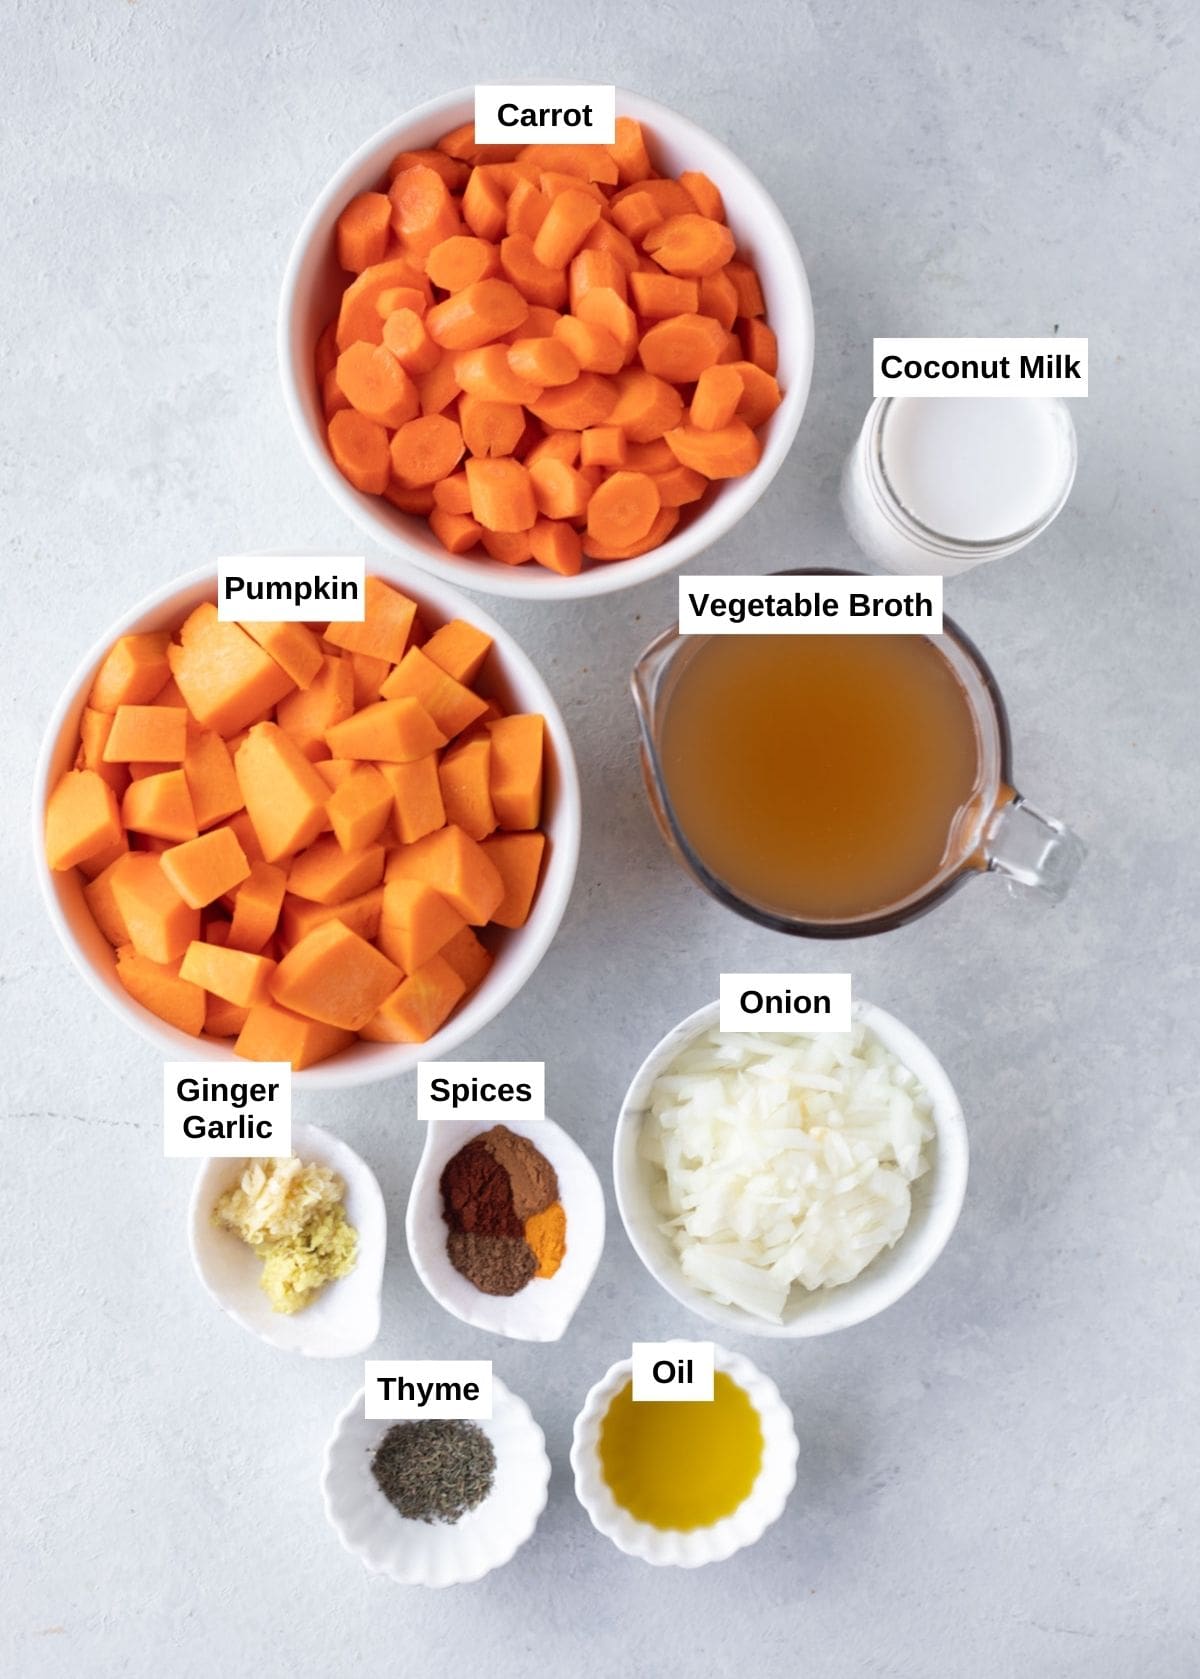 Ingredients to make pumpkin carrot soup